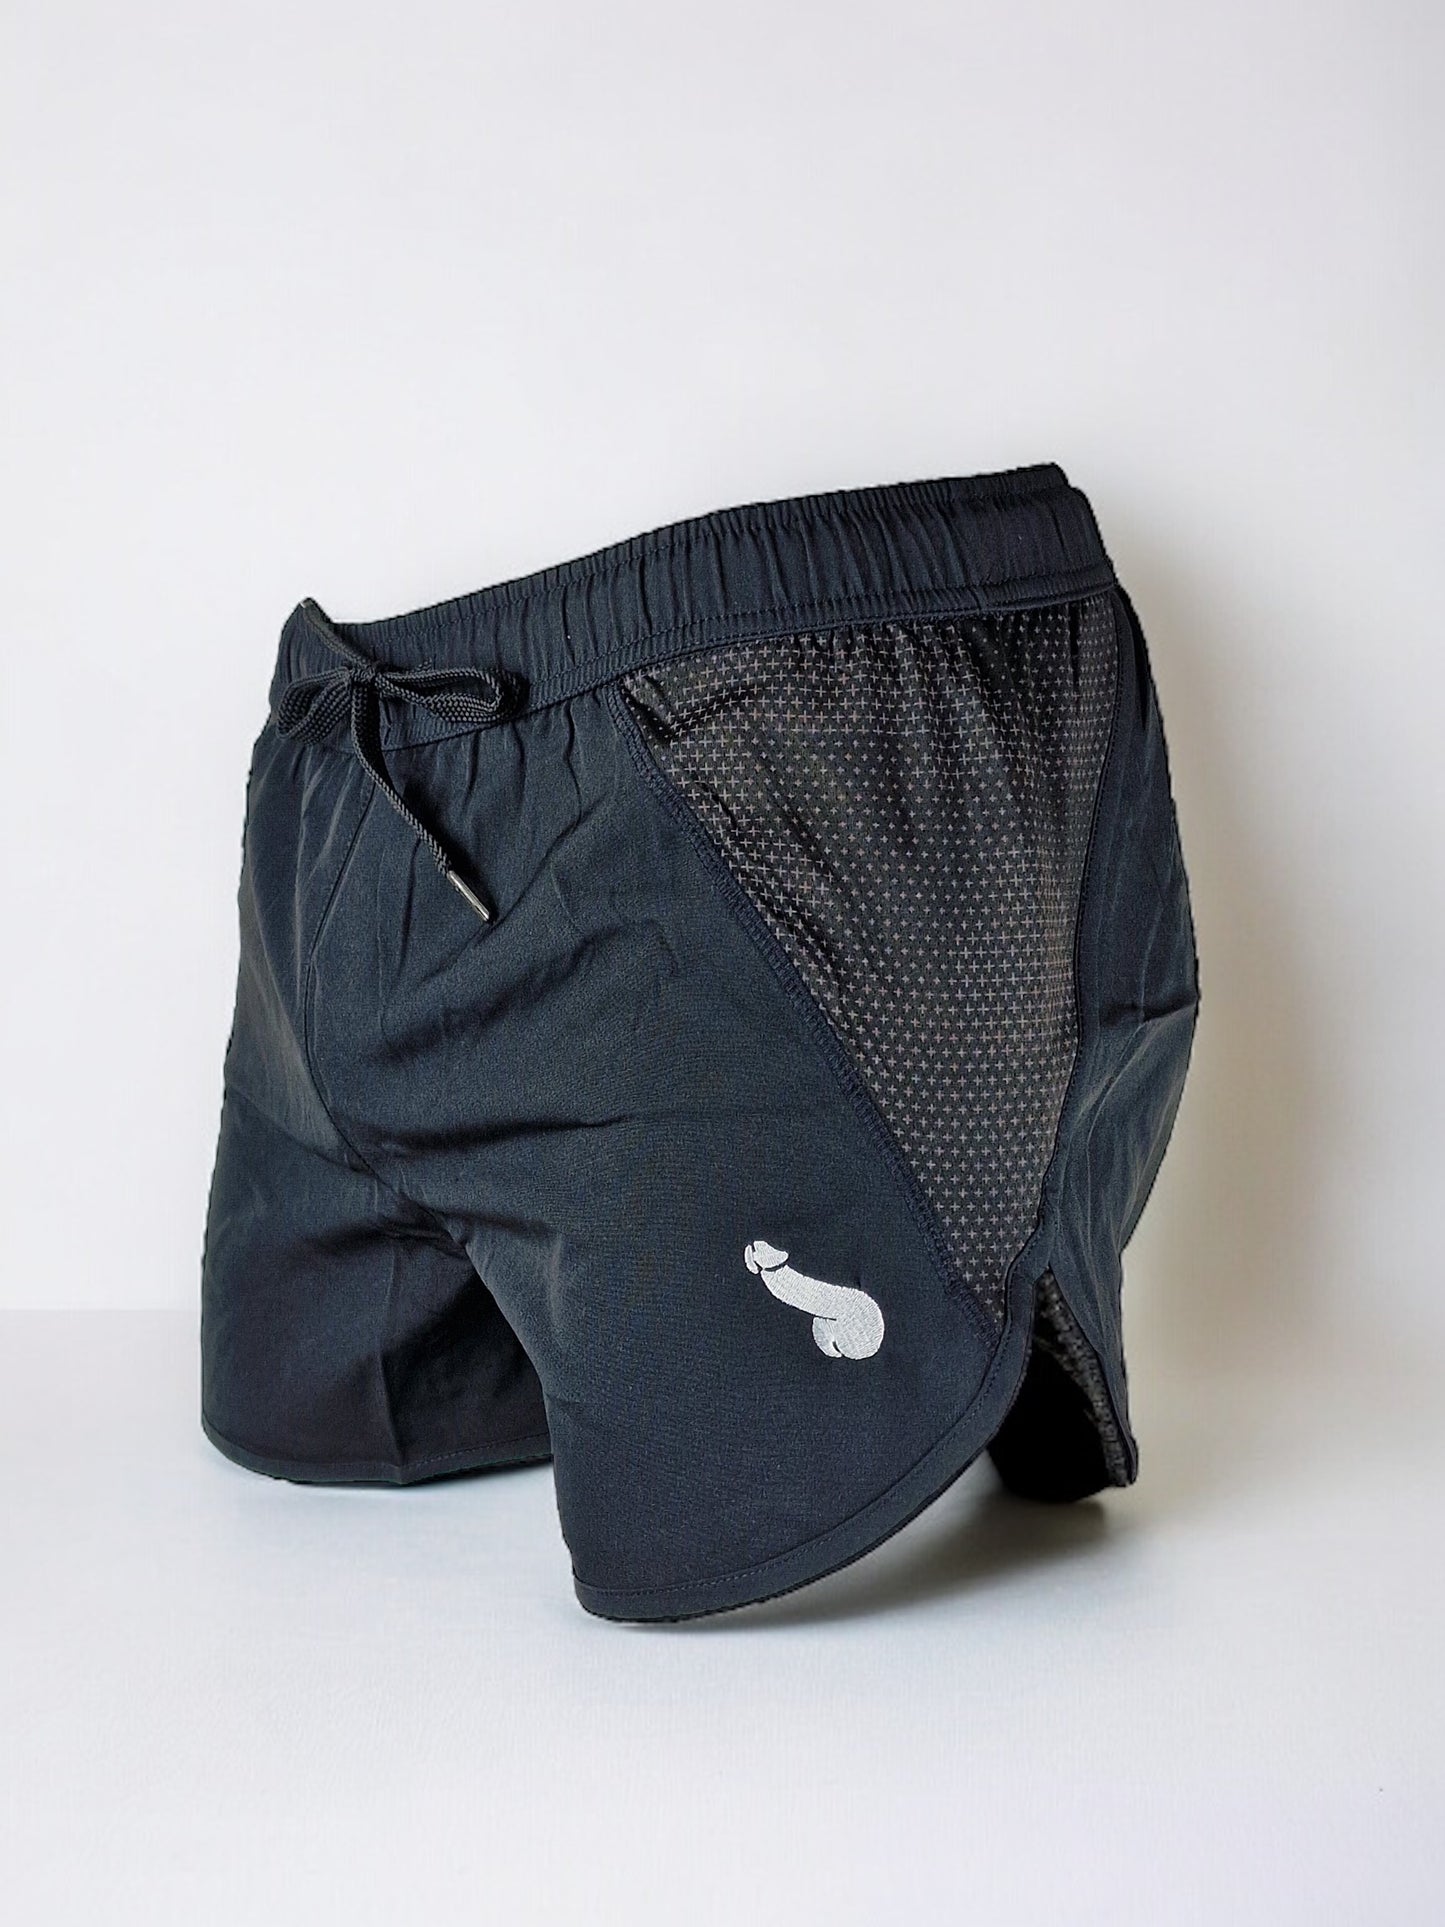 Training shorts / swimming shorts for men or unisex - Black